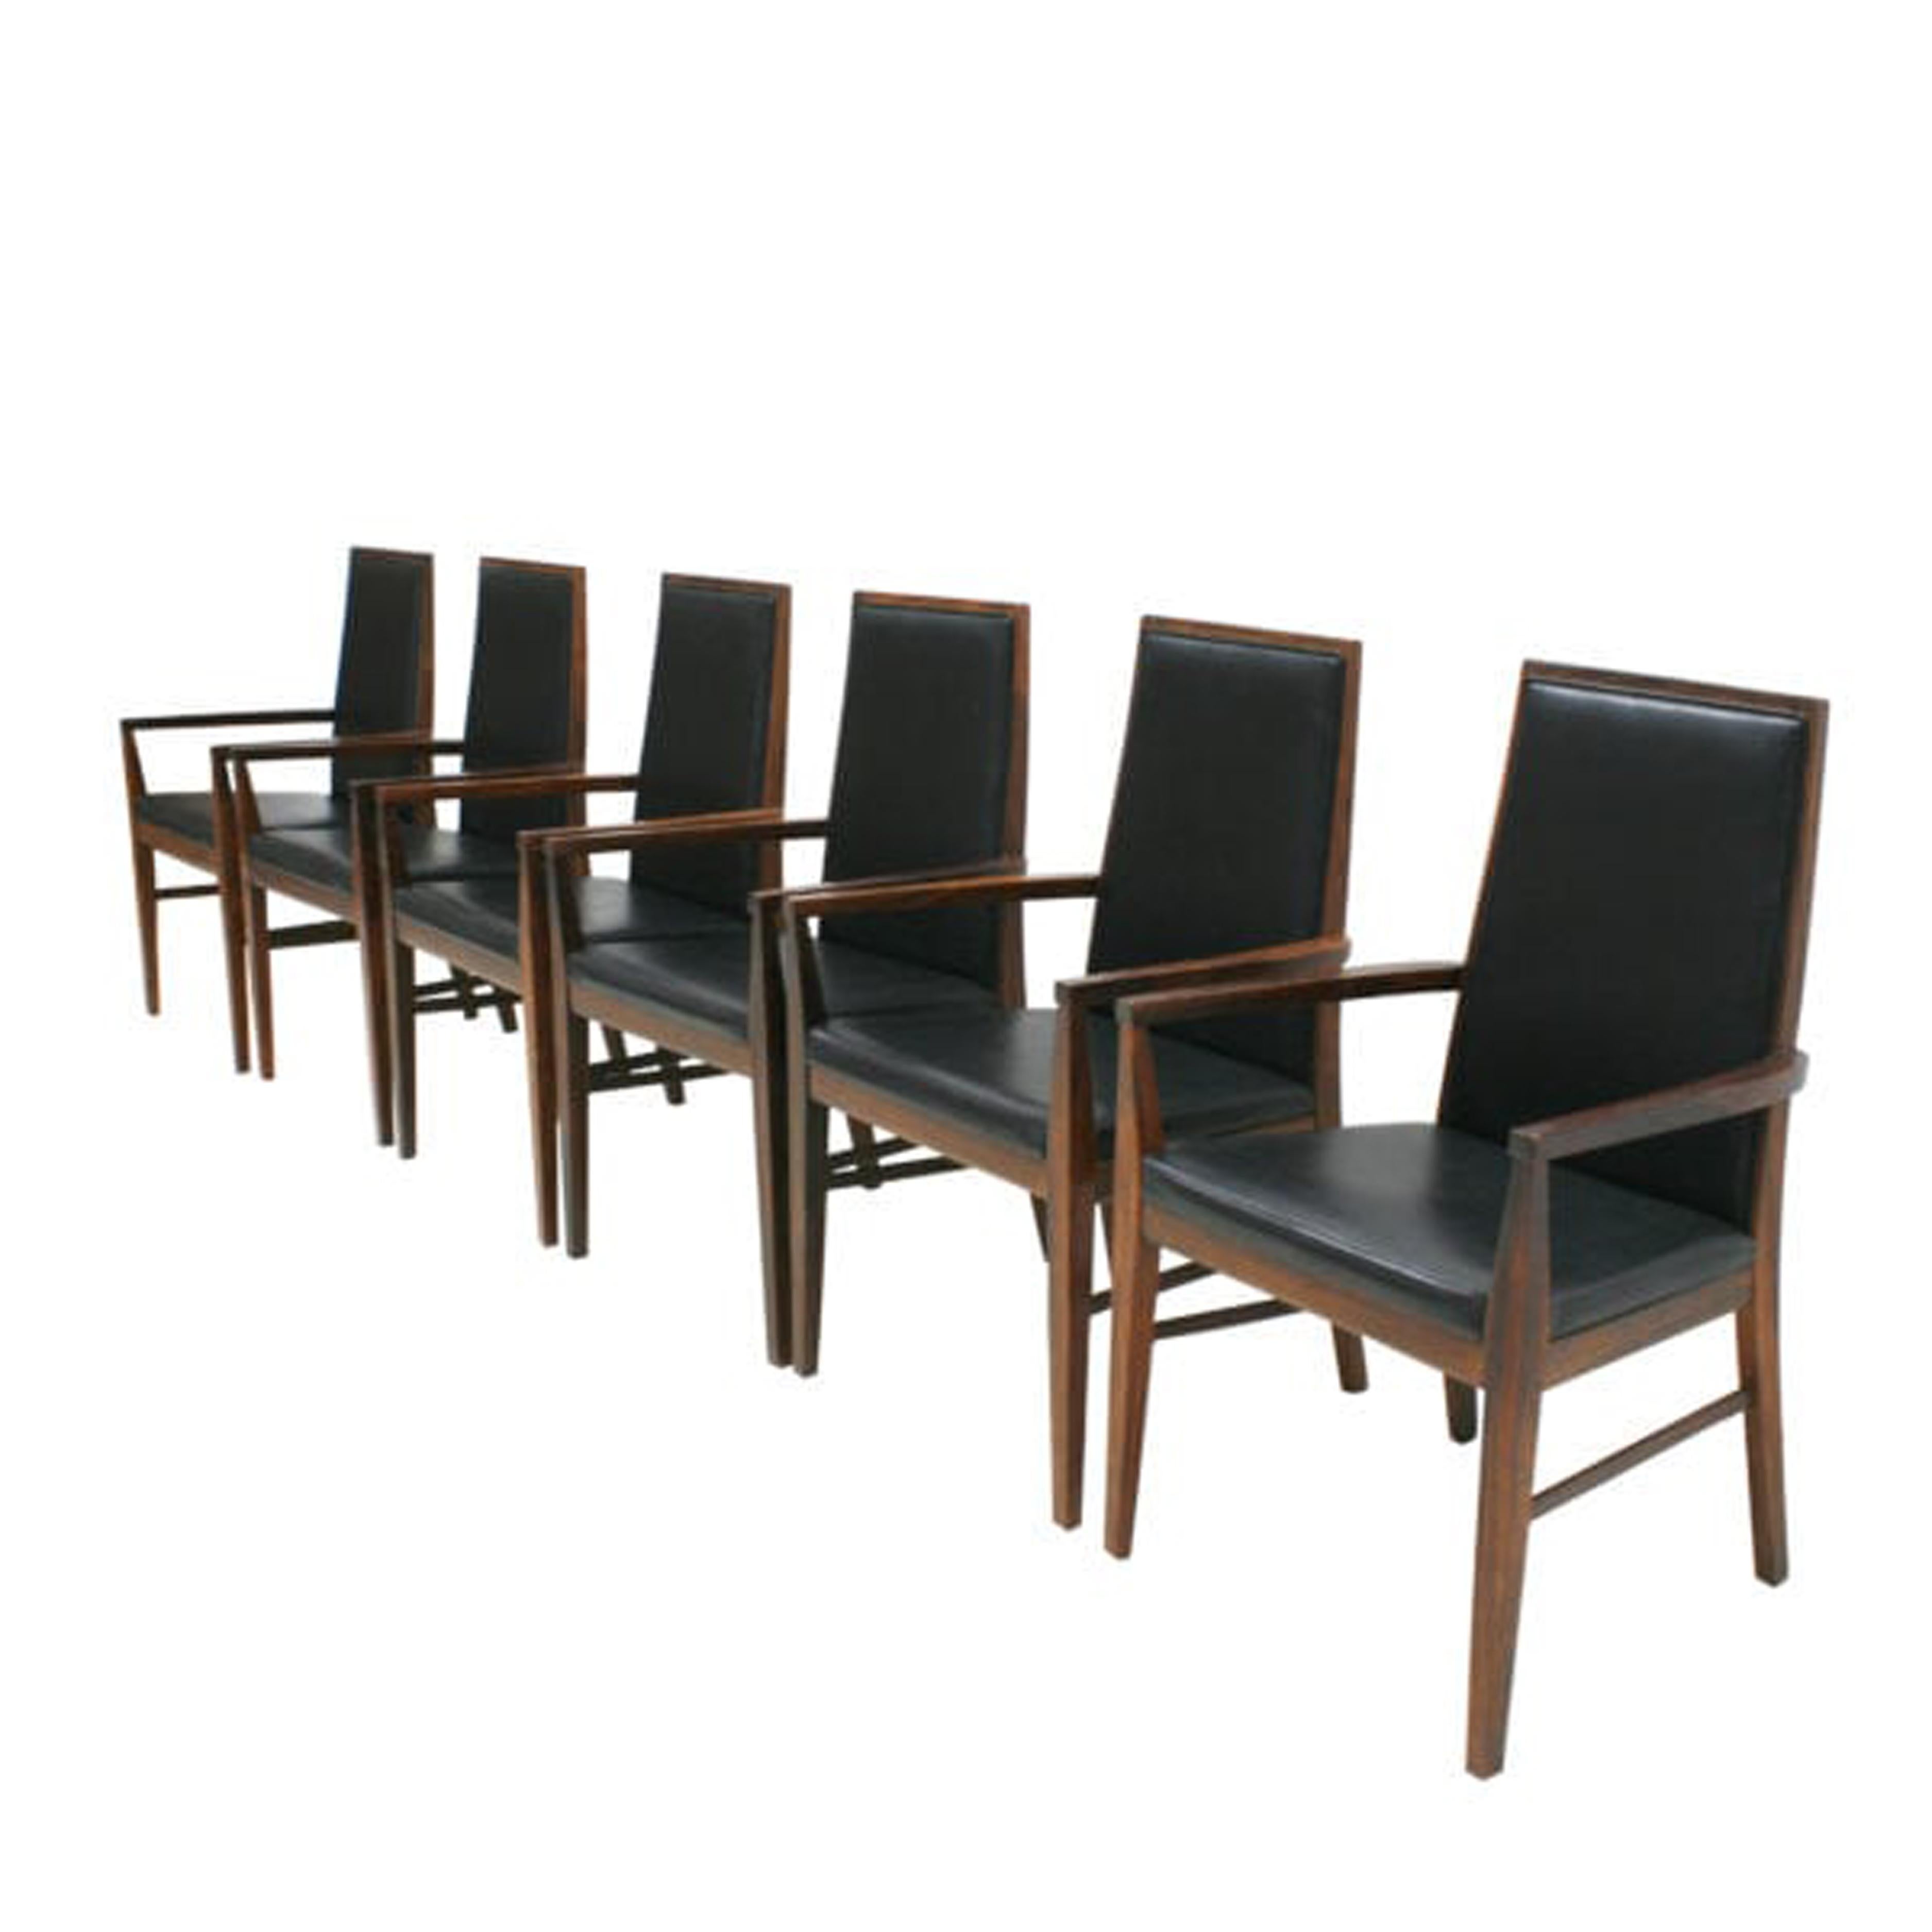 Arne Vodder Mid-Century Modern Set of Six Leather Dyrlund Danish Chairs, 1960s For Sale 5